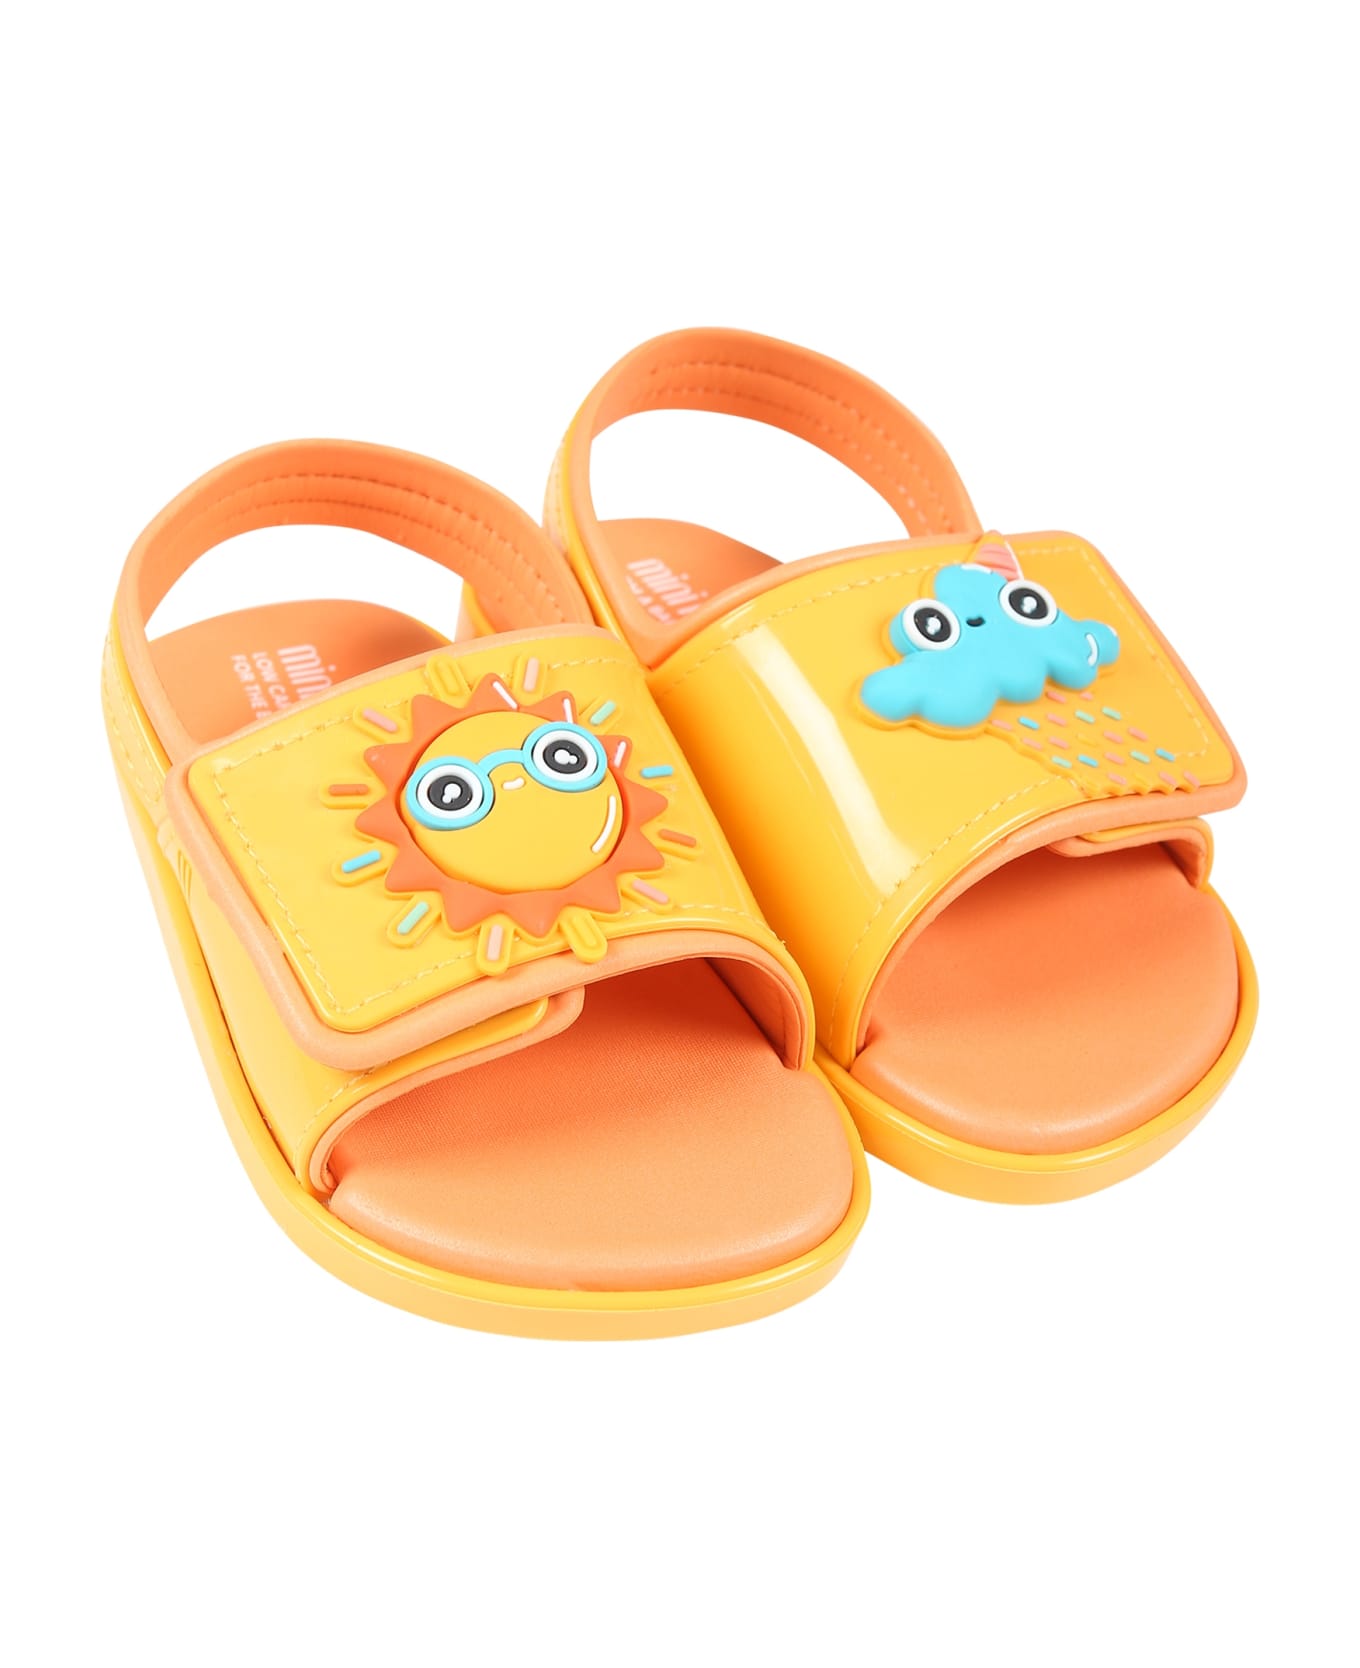 Melissa Orange Sandals For Kids With Sun And Cloud - Orange